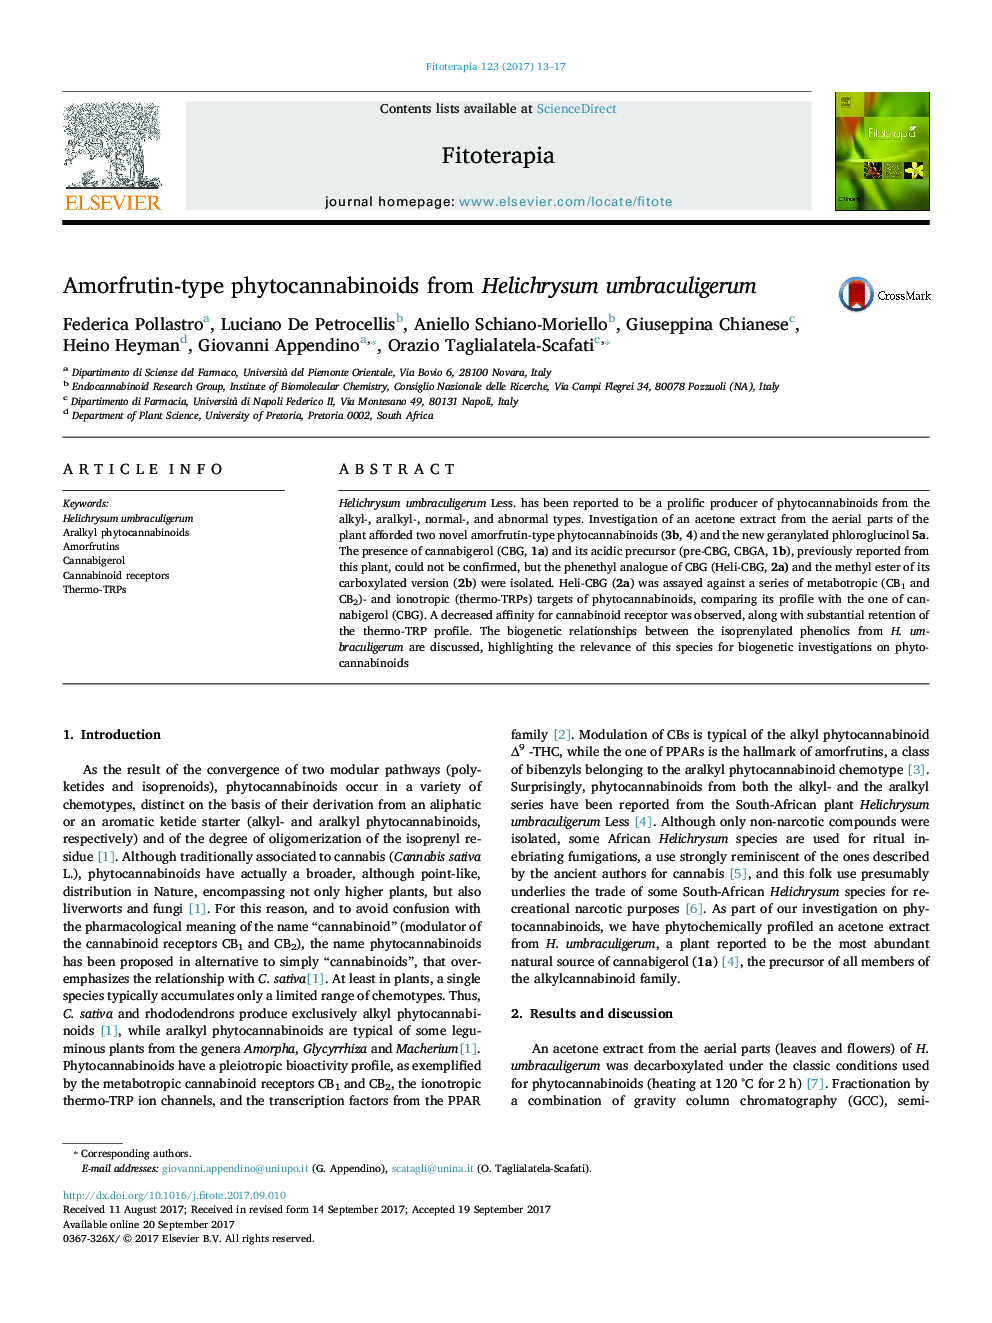 Amorfrutin-type phytocannabinoids from Helichrysum umbraculigerum